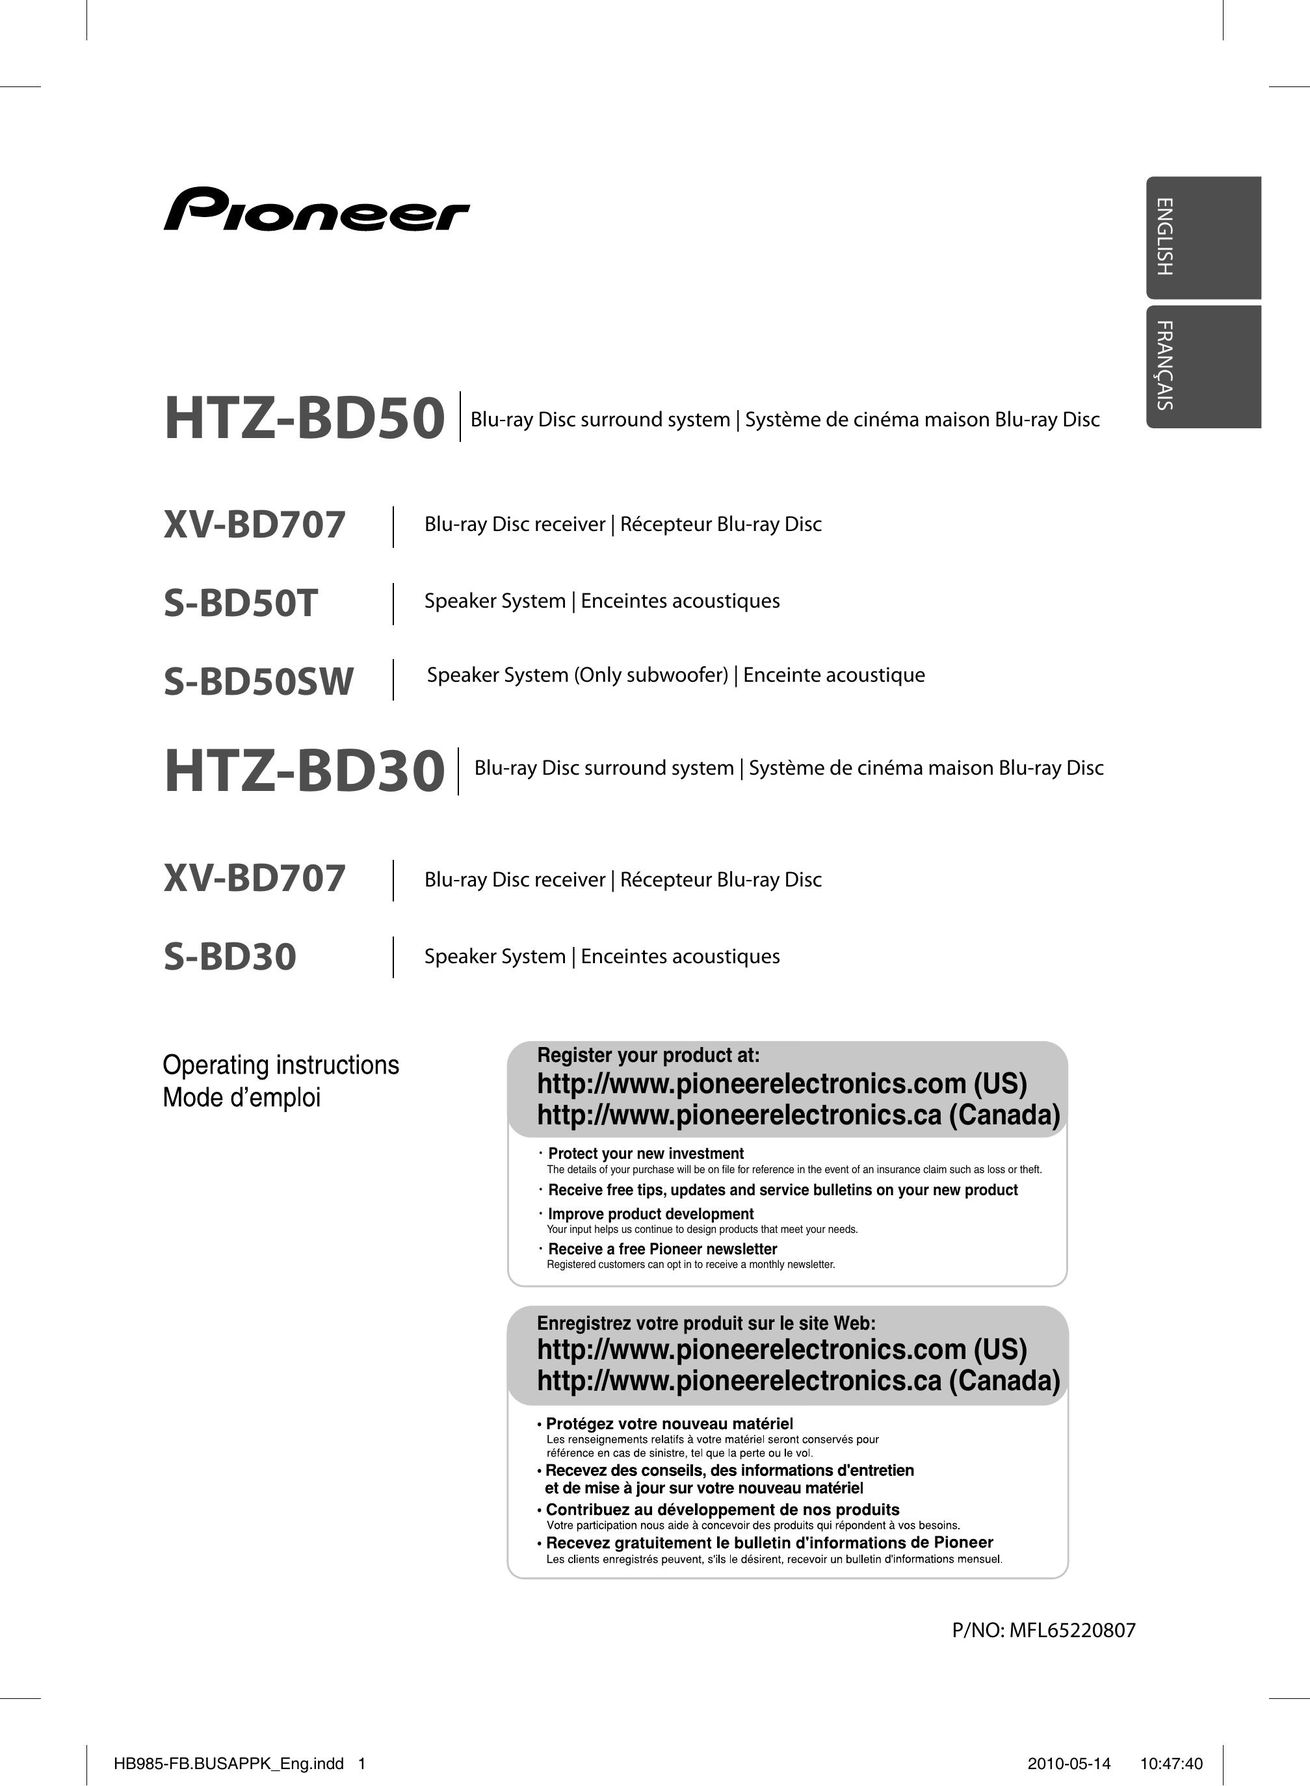 Pioneer HTZ-BD30 Blu-ray Player User Manual